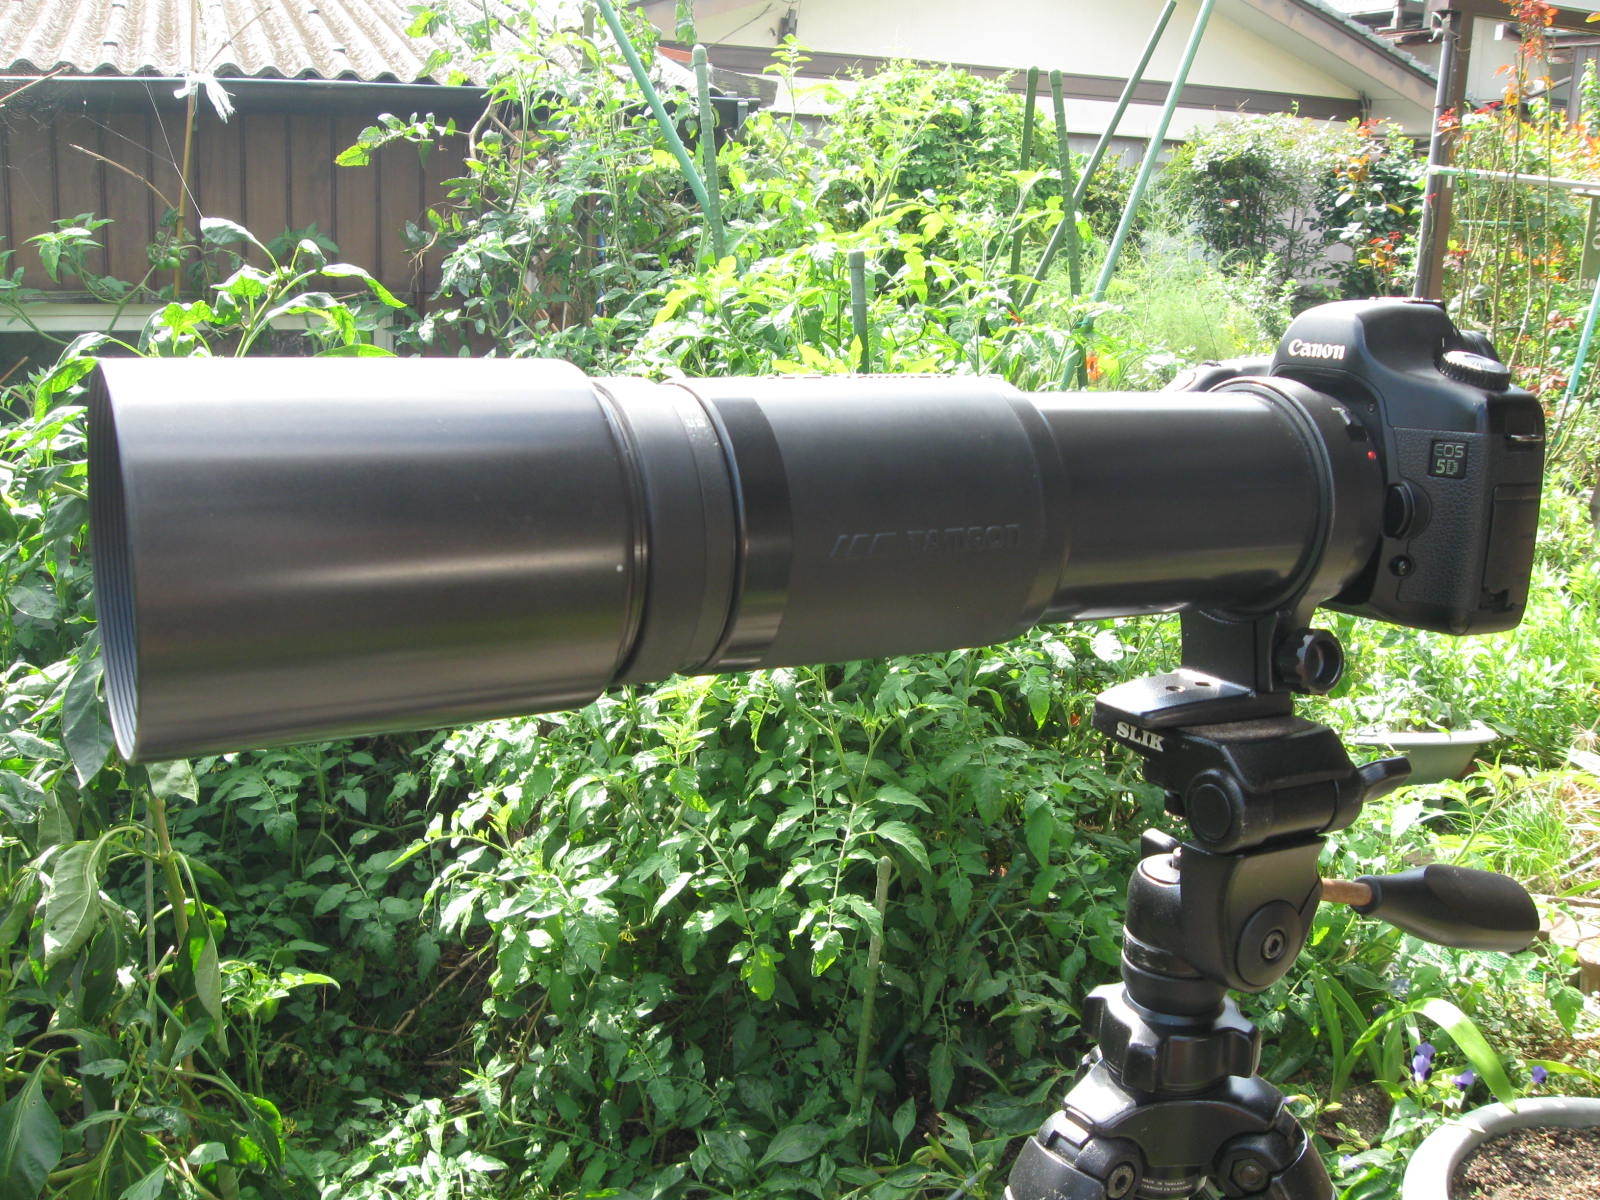 TAMRON AF 200-400mm F5.6 LD IF [75D] 貧者の望遠レンズの実力は